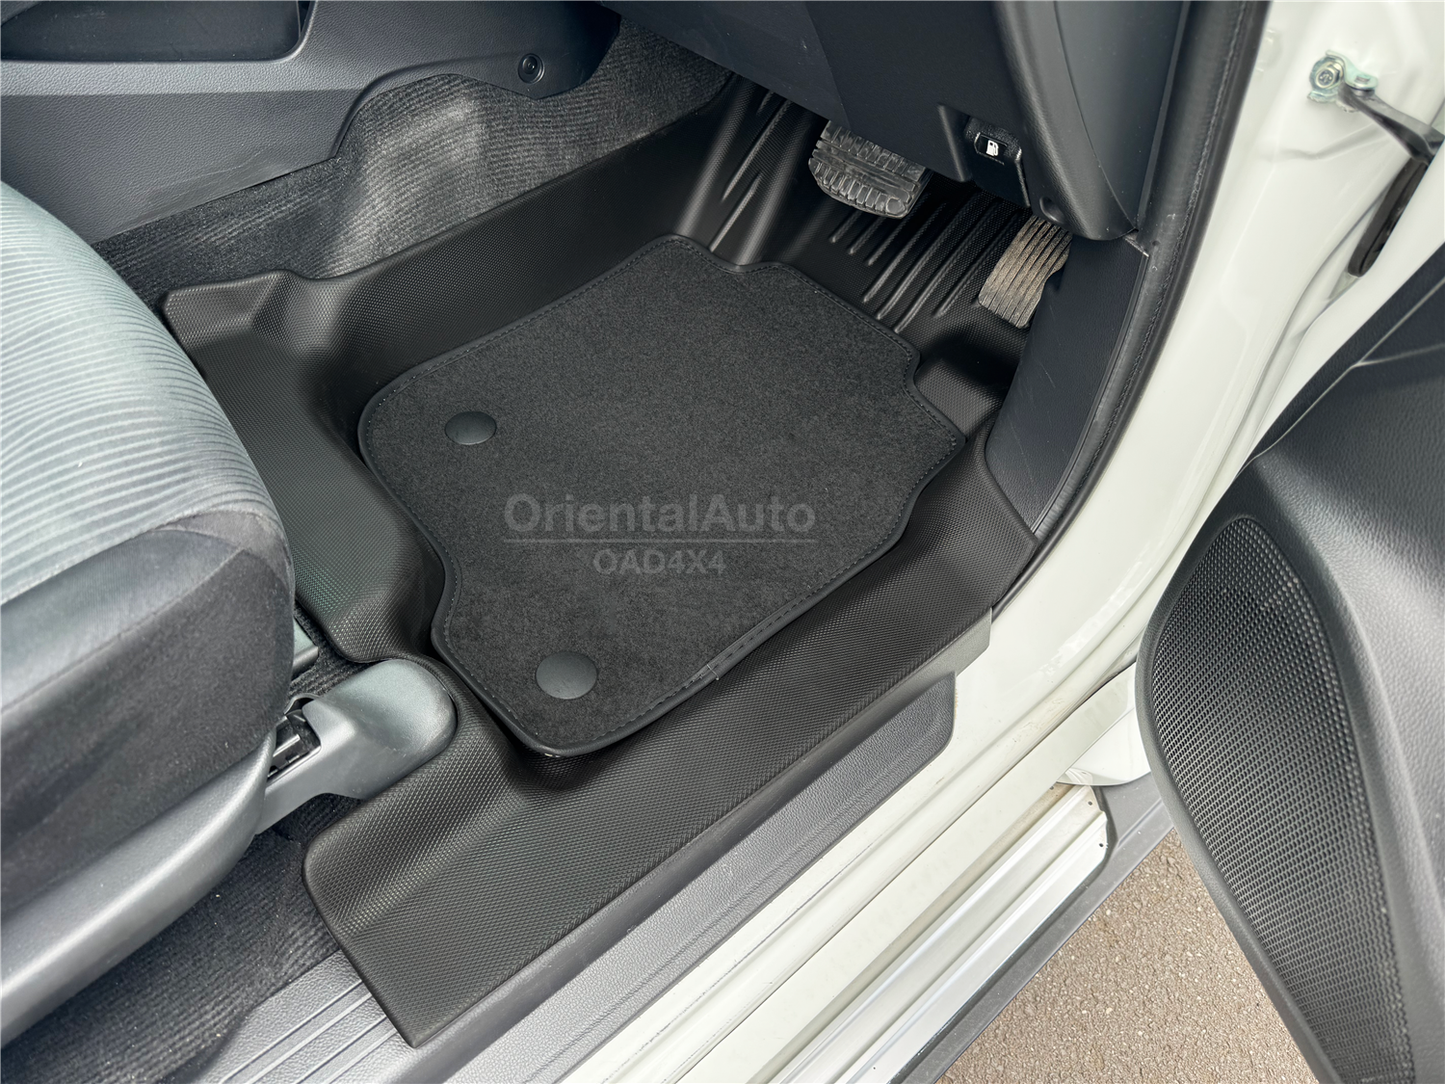 3 Rows TPE Floor Mats & Cargo Mat for Mitsubishi Pajero Sport 7 Seater 2015-Onwards Door Sill Covered Car Mats Carpet + Boot Mat